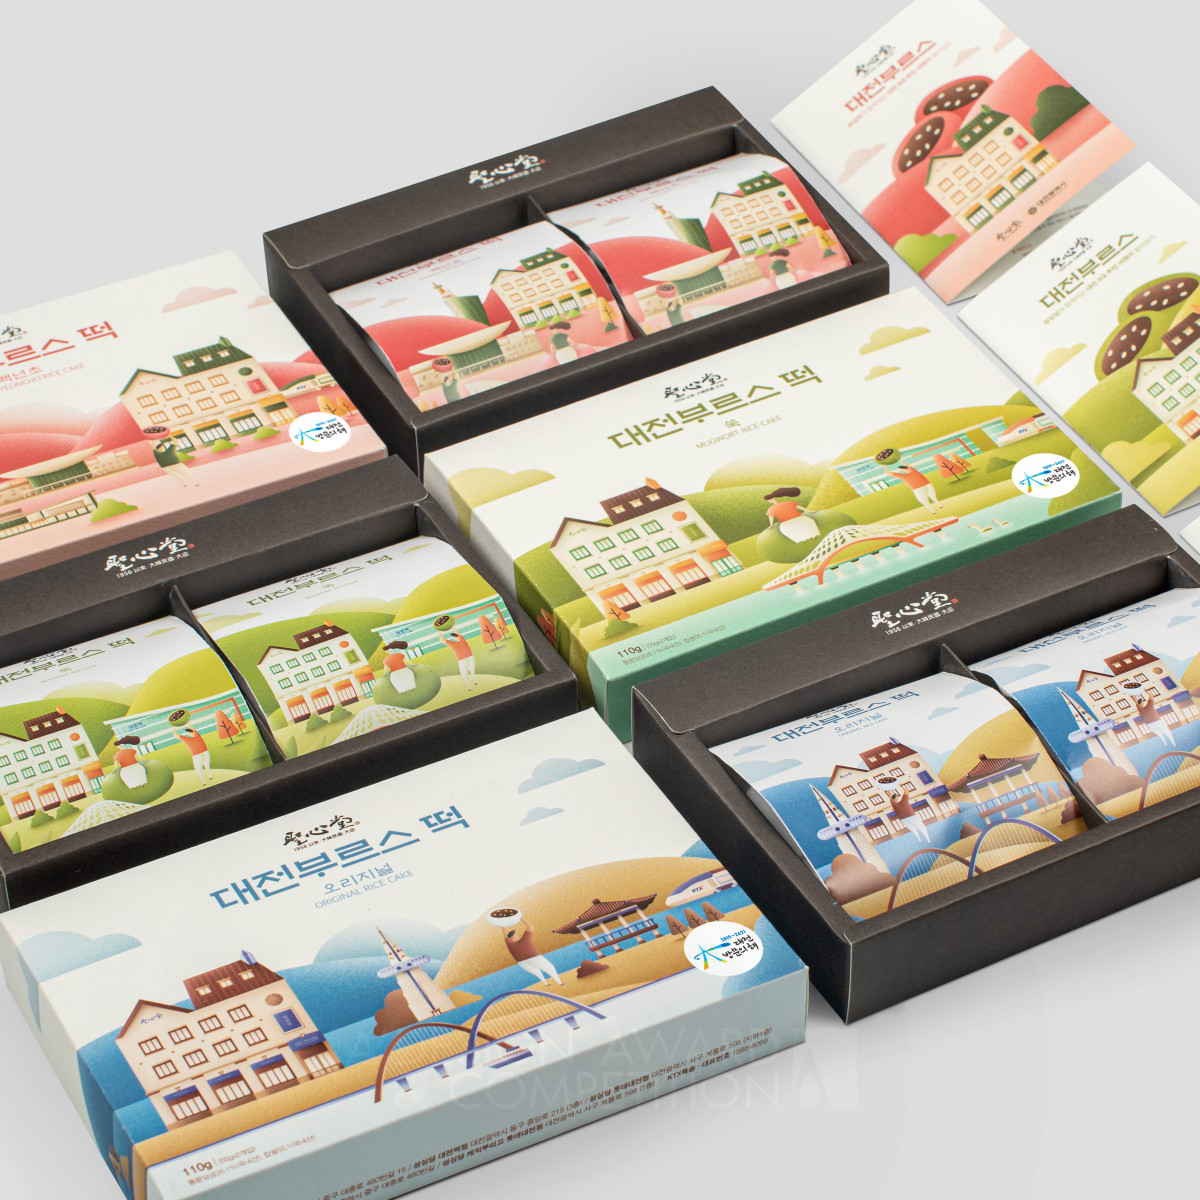 Daejeon Bruce Rice Cake Redesign Packaging Design